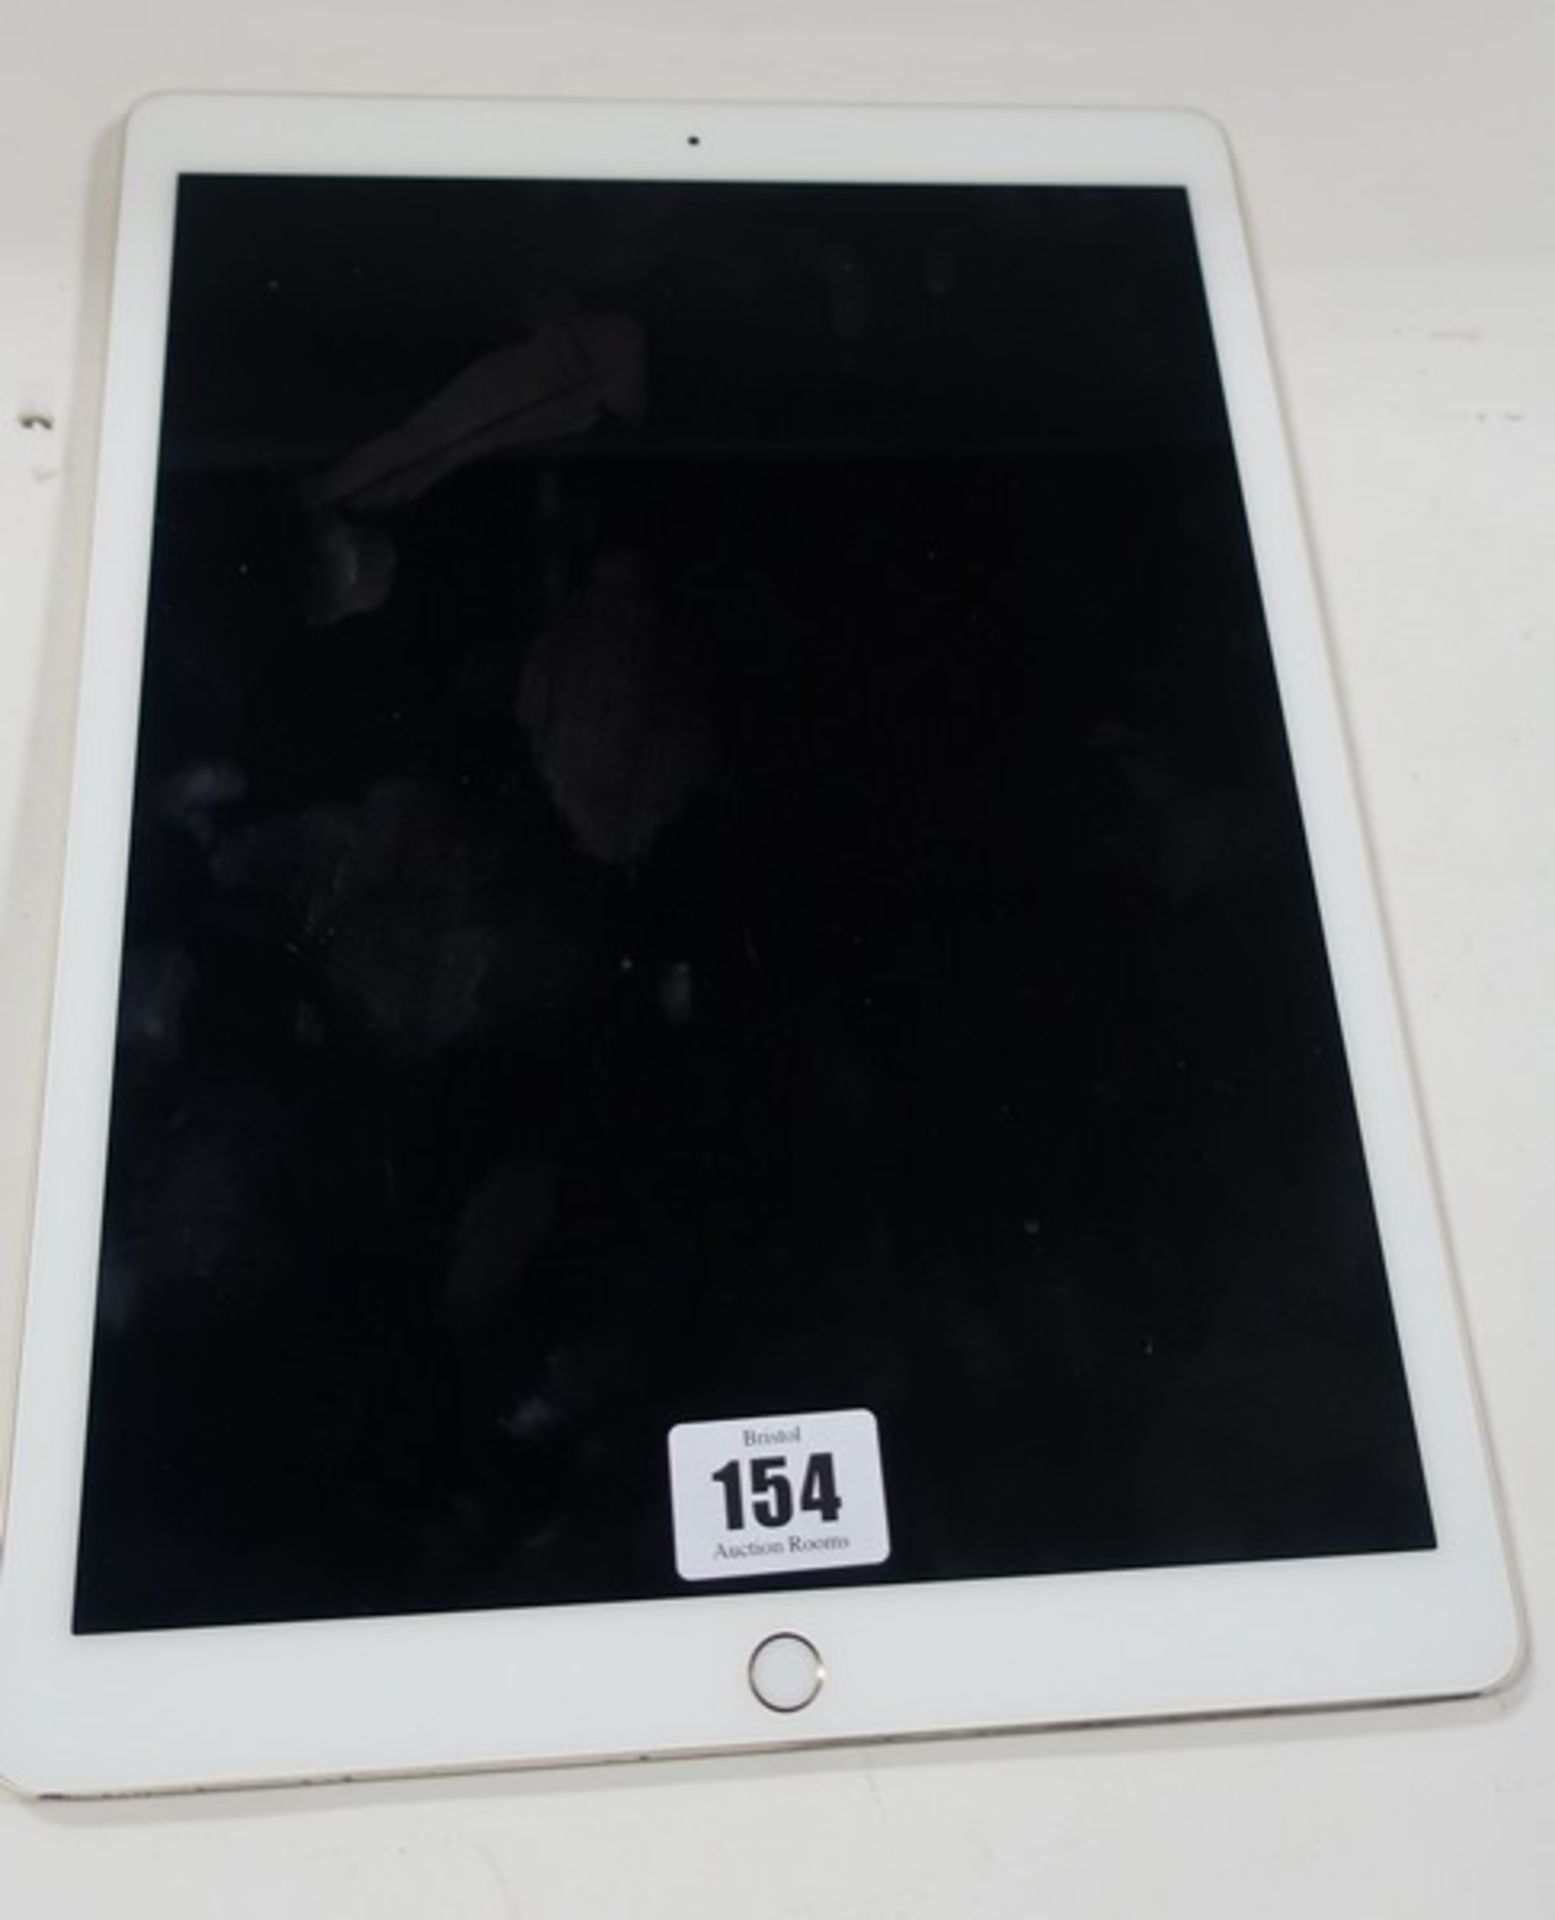 An iPad Pro model A1584 12.9 inch serial: DLXR61GAGMLG (Activation locked).